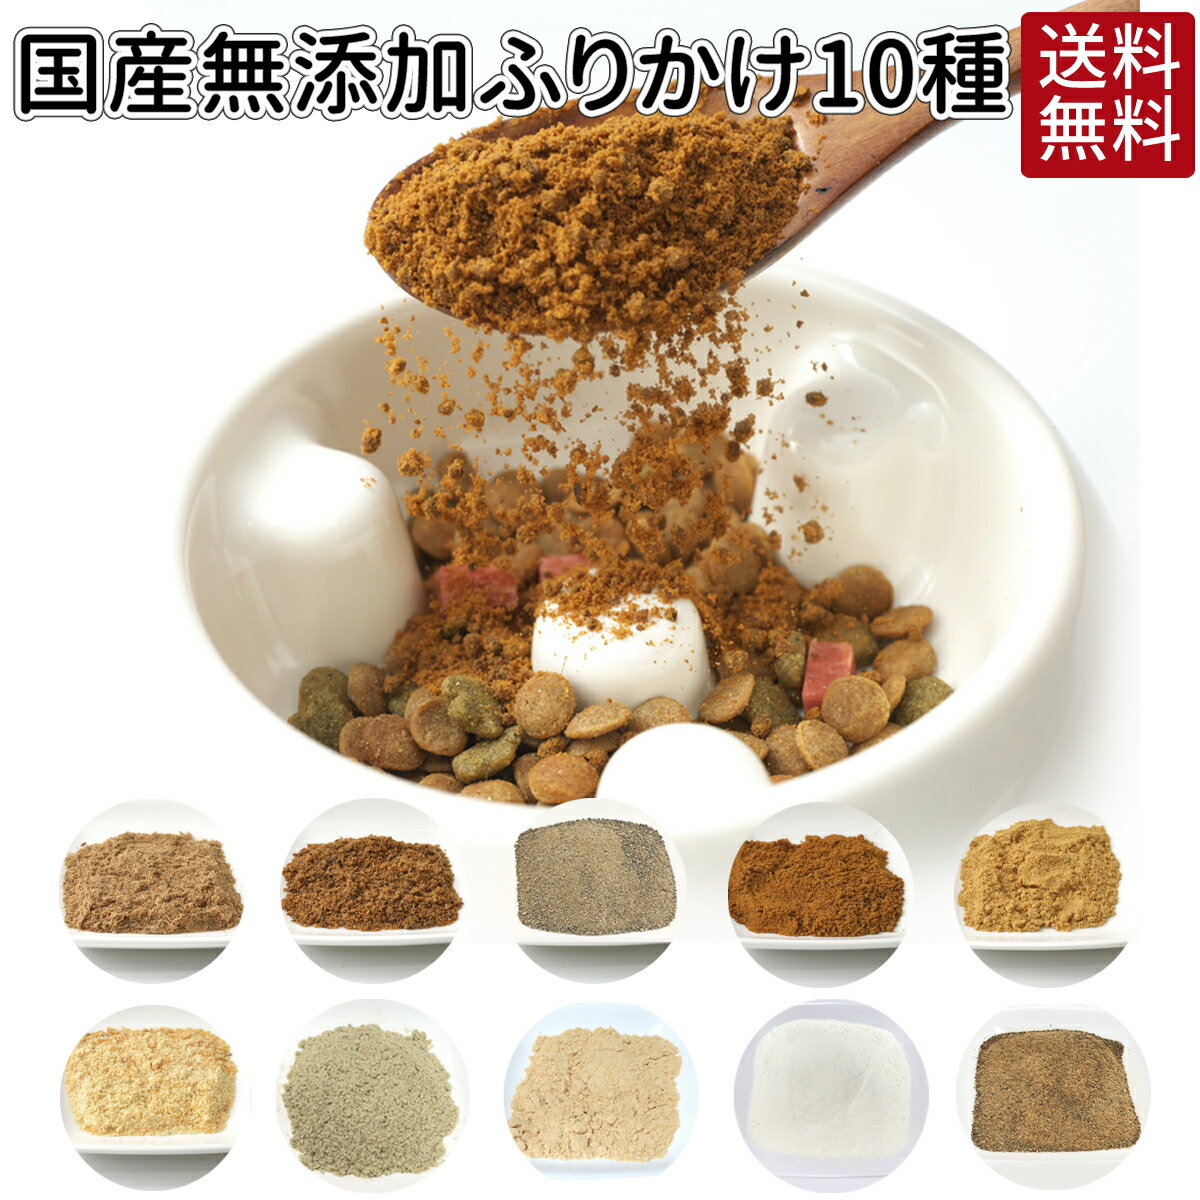 ■nico cook 青森県産ごぼうパウダー 犬用 20g○